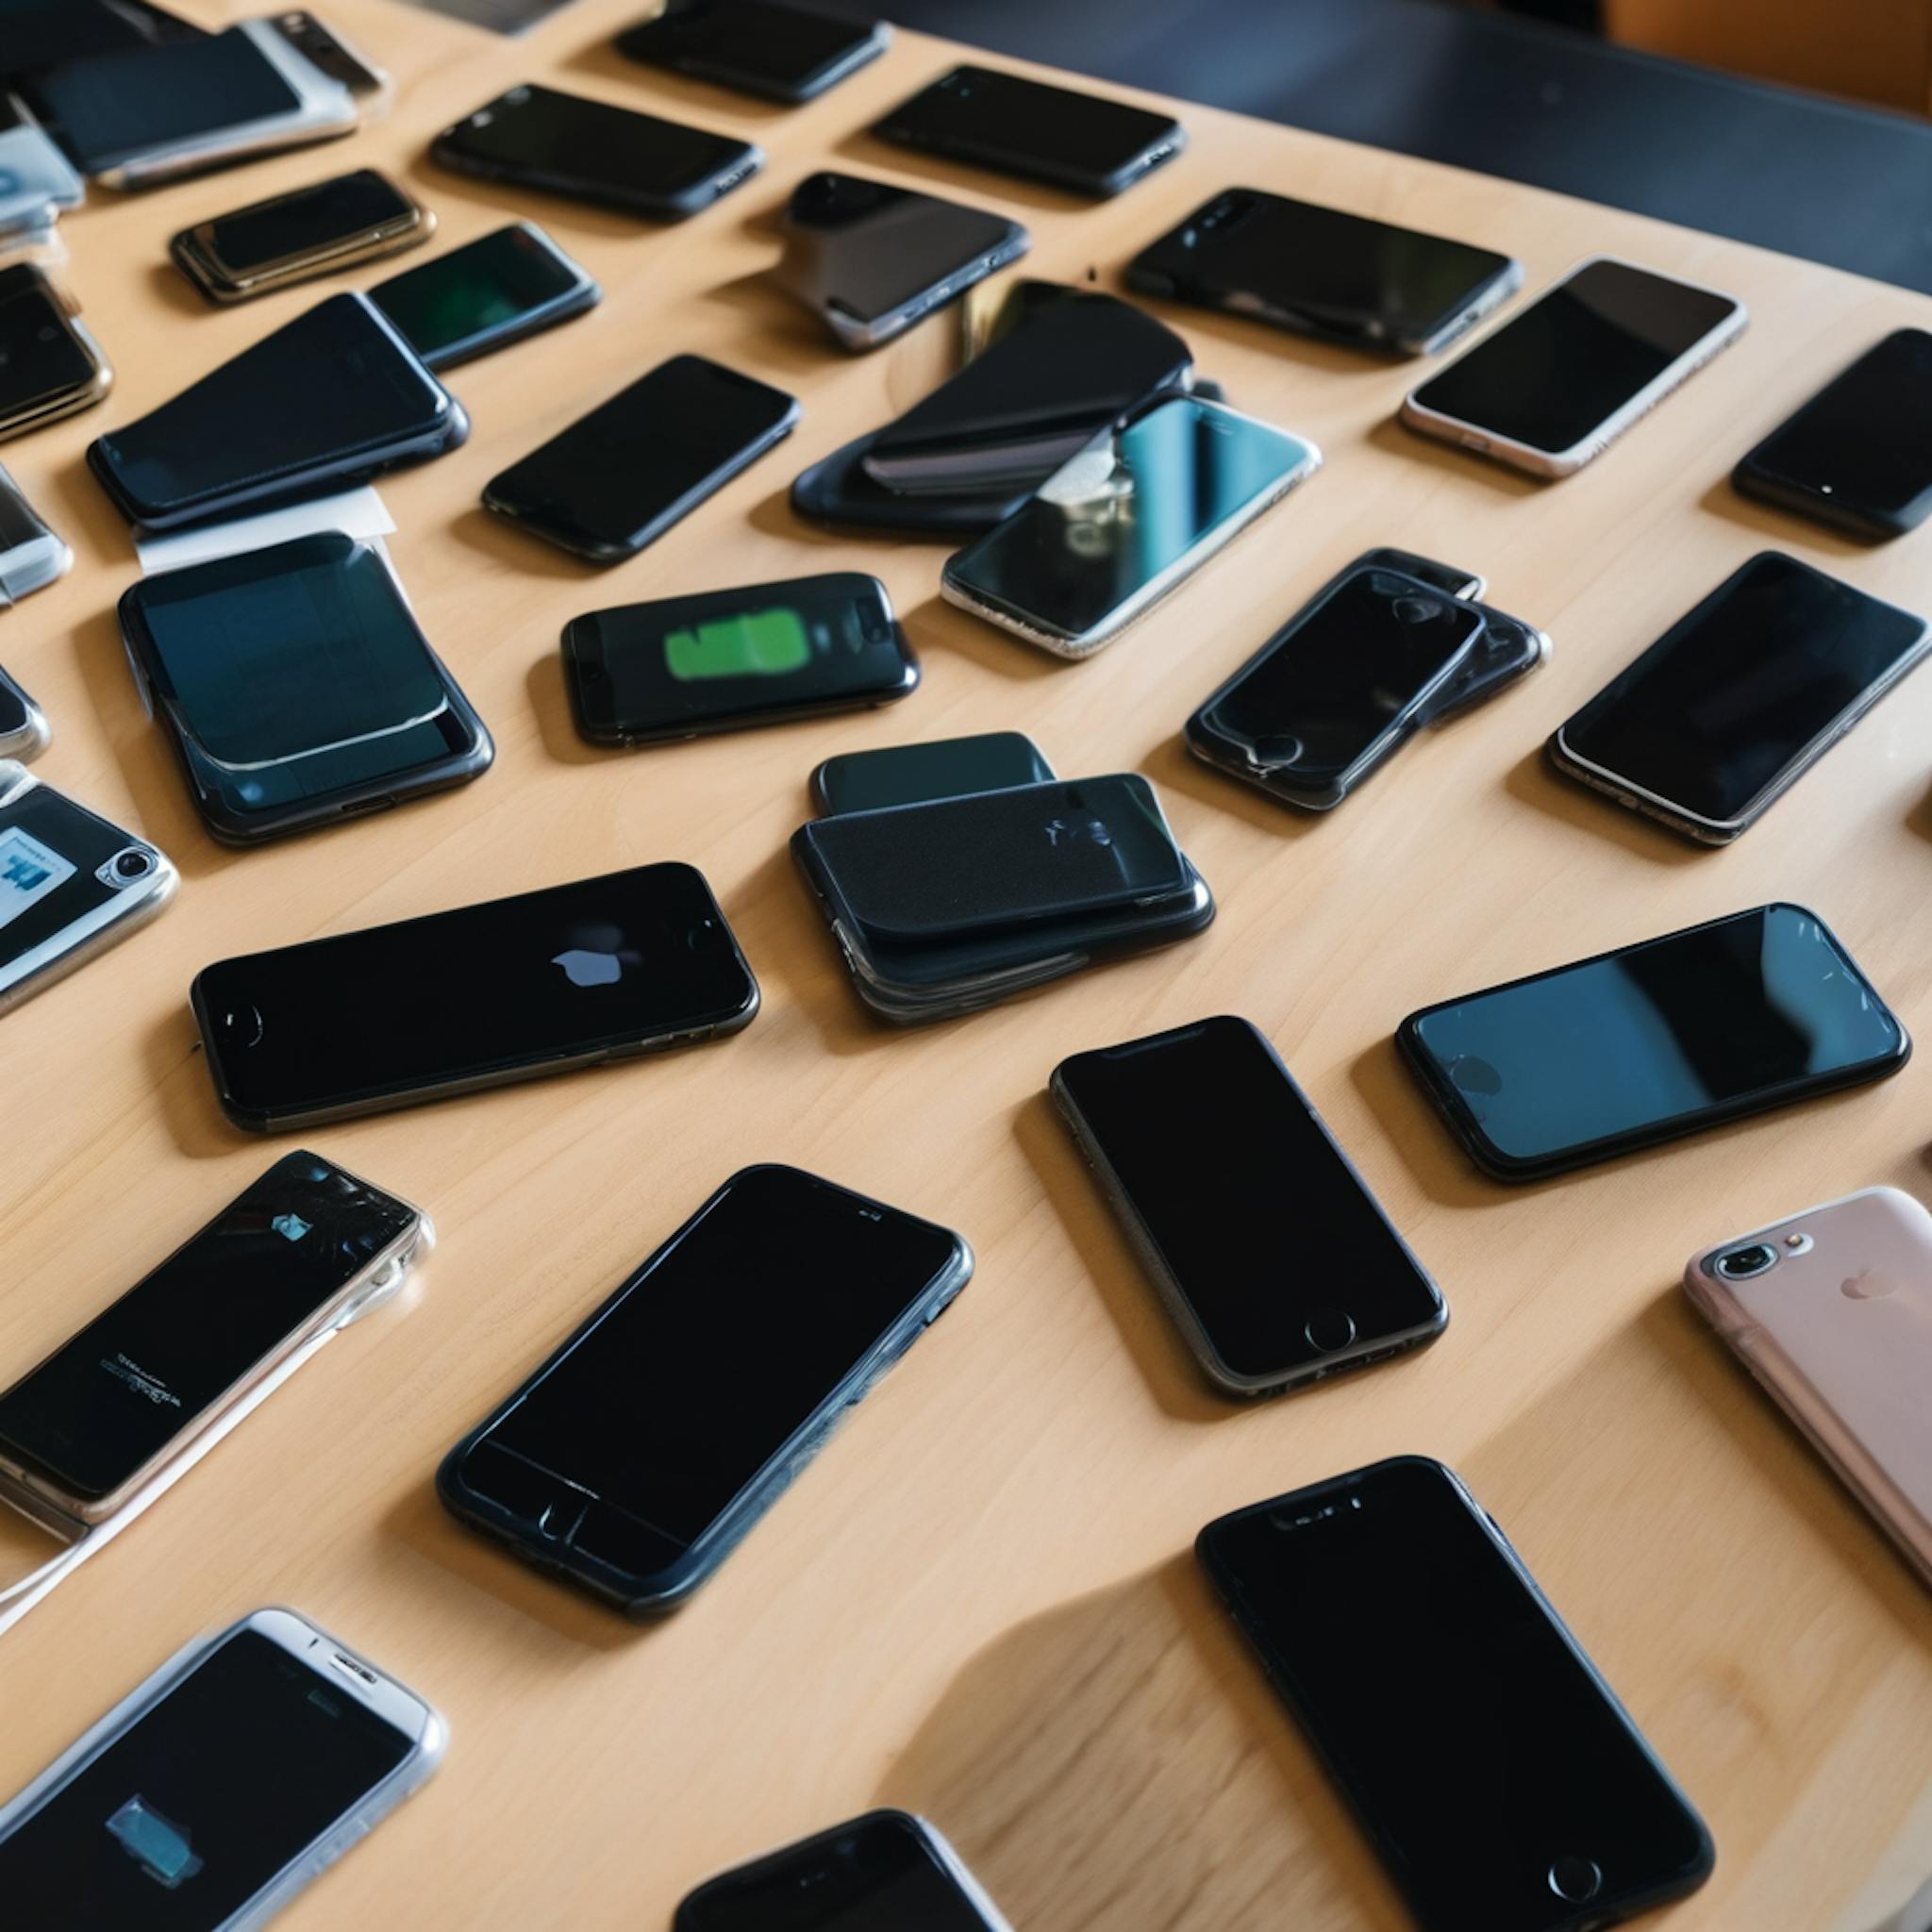 featured image - O DOJ processa a Apple por orquestrar um monopólio no mercado de smartphones